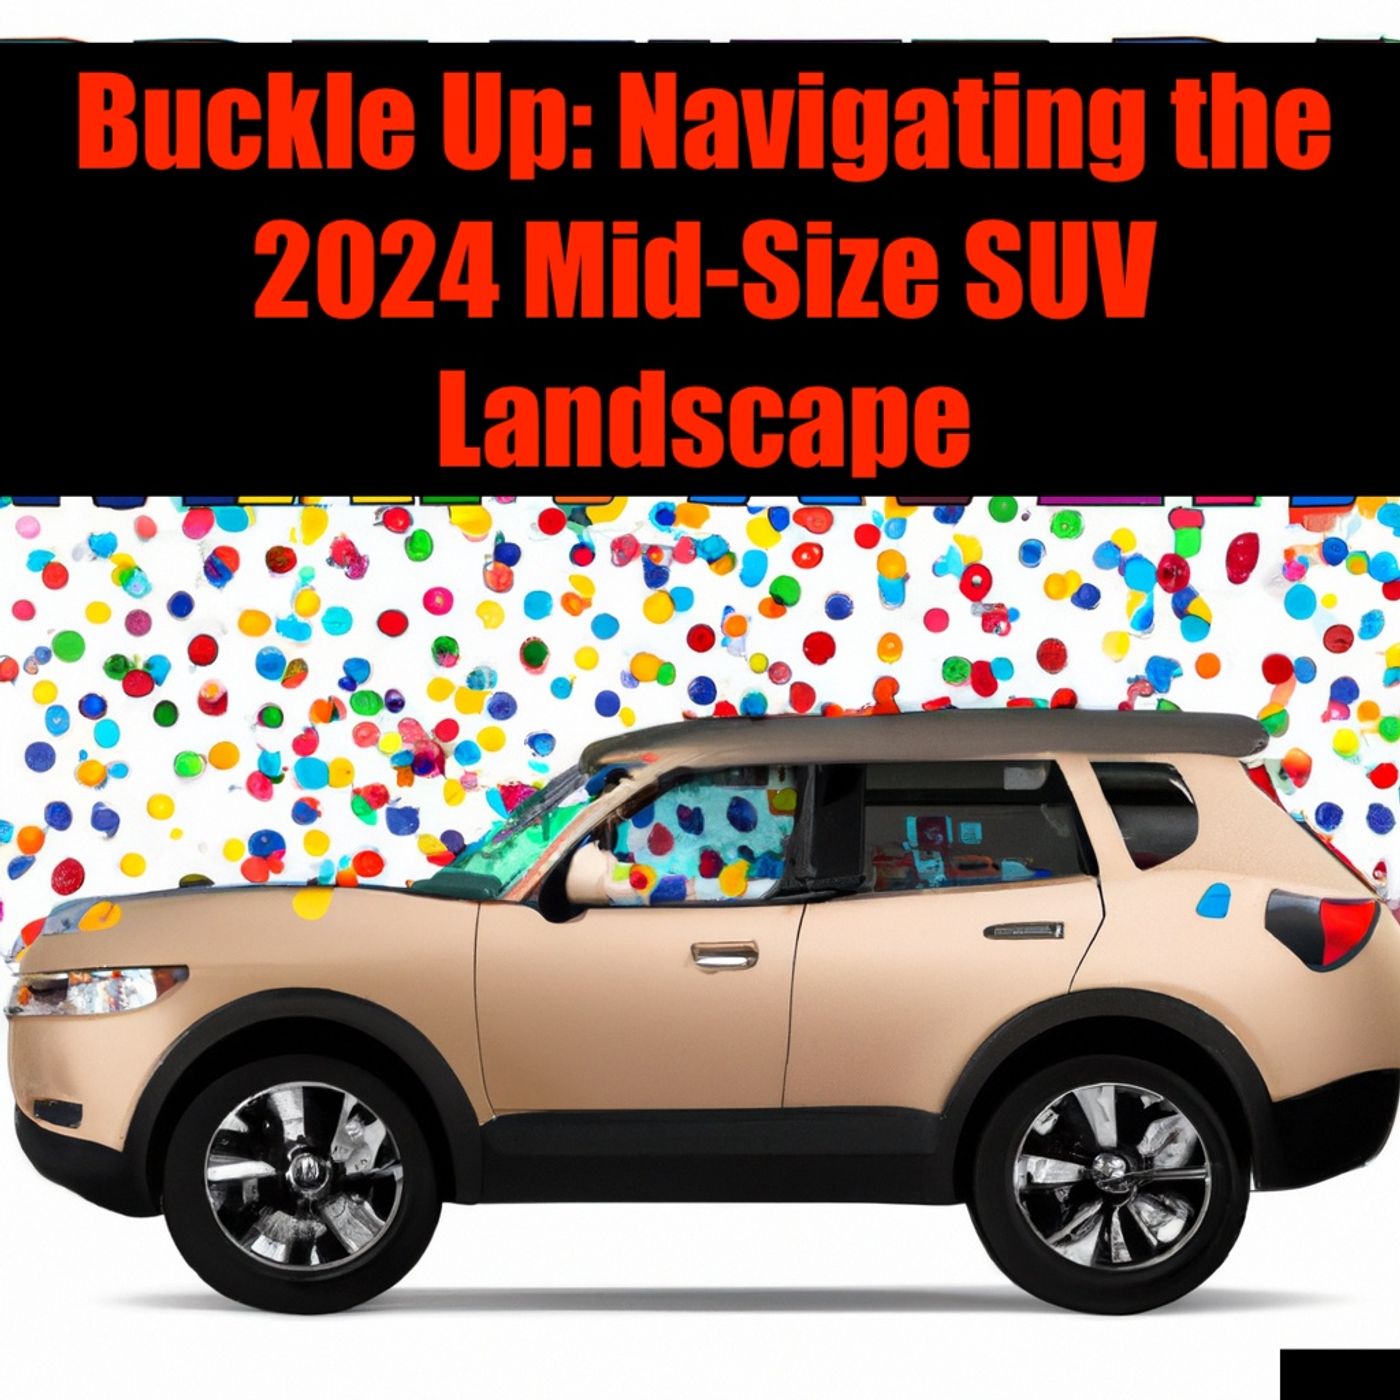 Buckle Up: Navigating the 2024 Mid-Size SUV Landscape